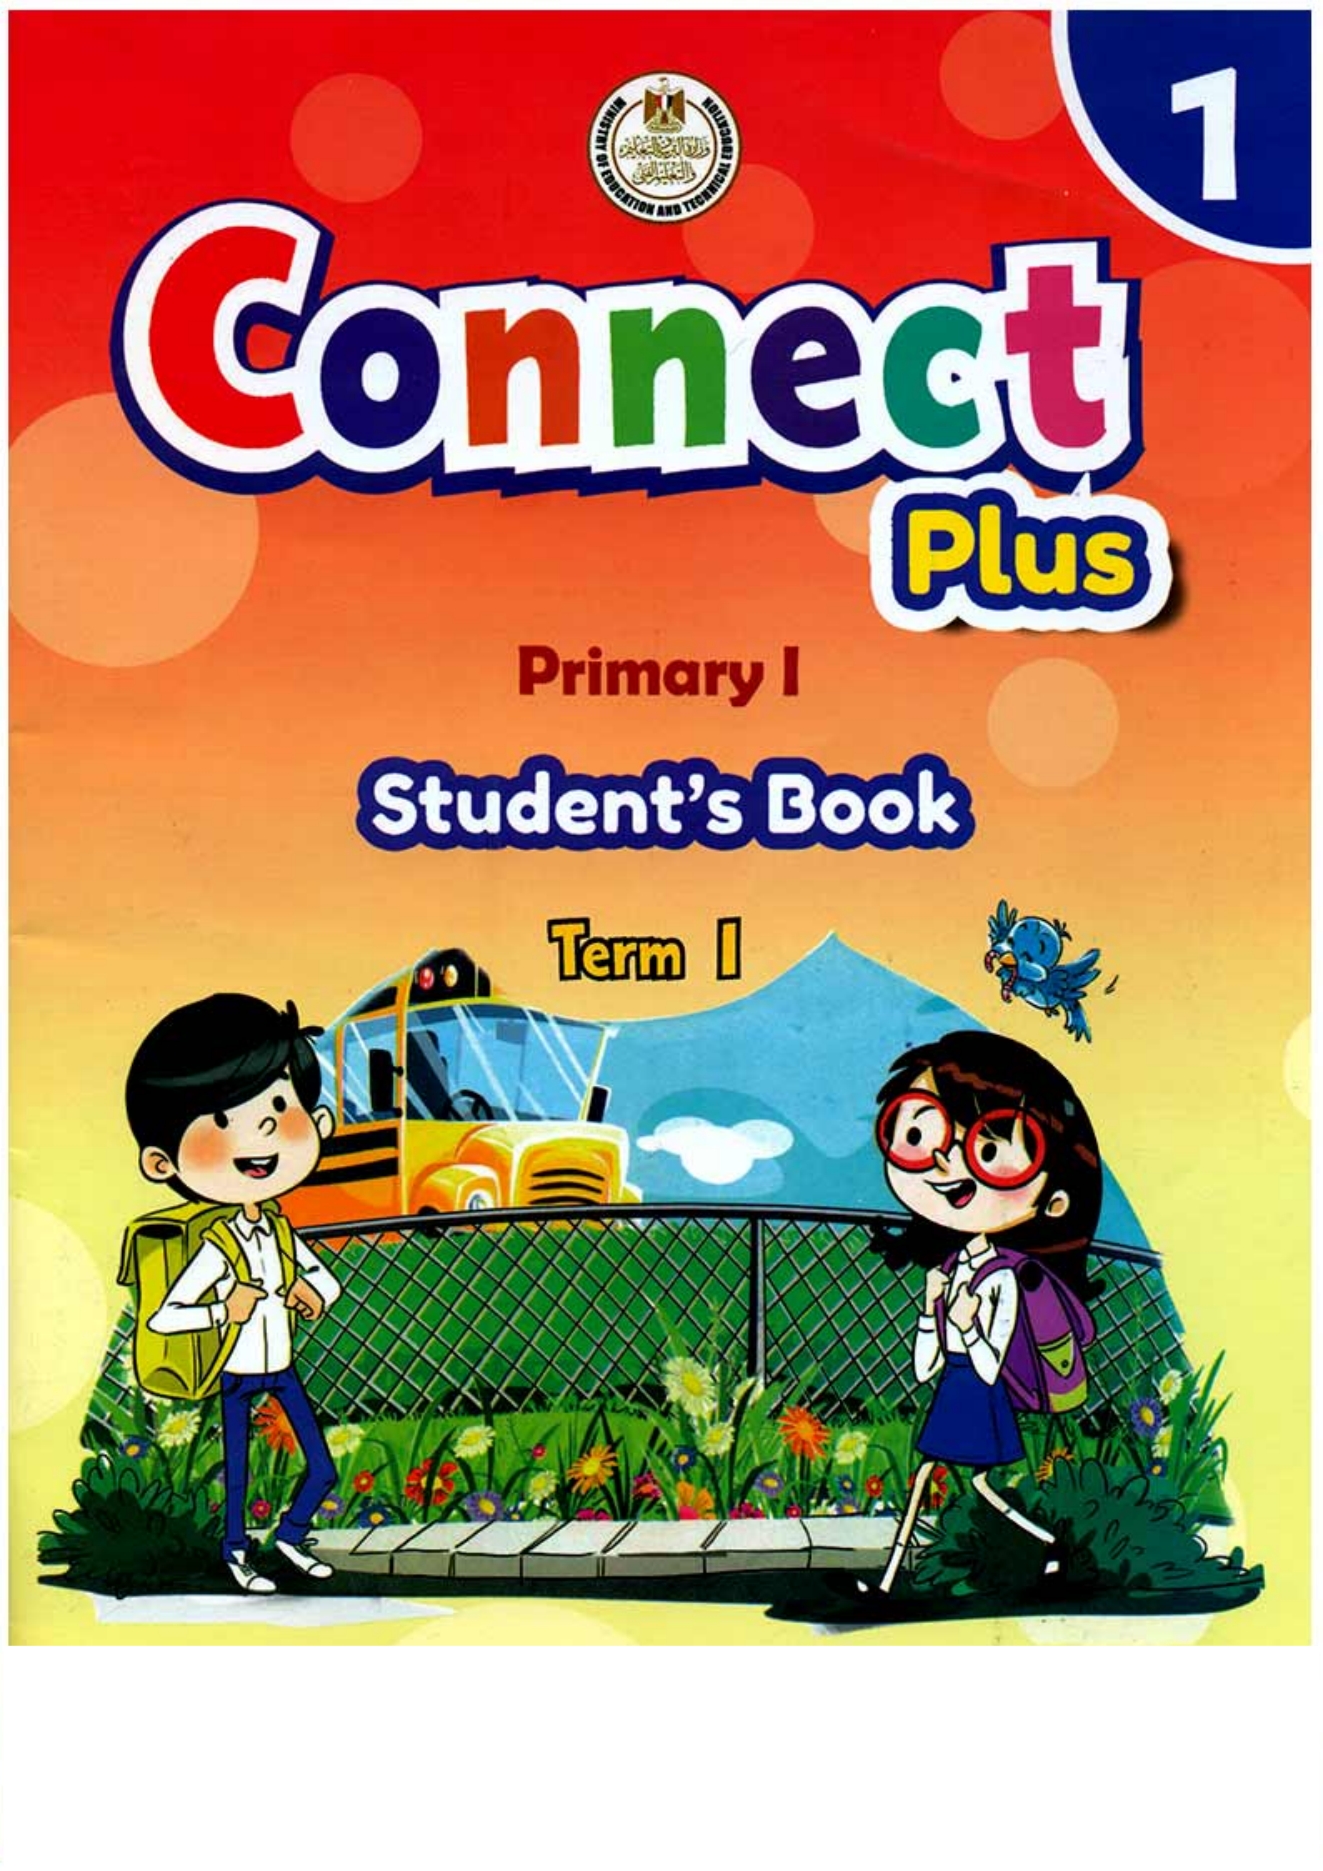 Connect Plus Prima 1 Term 1 Student's book